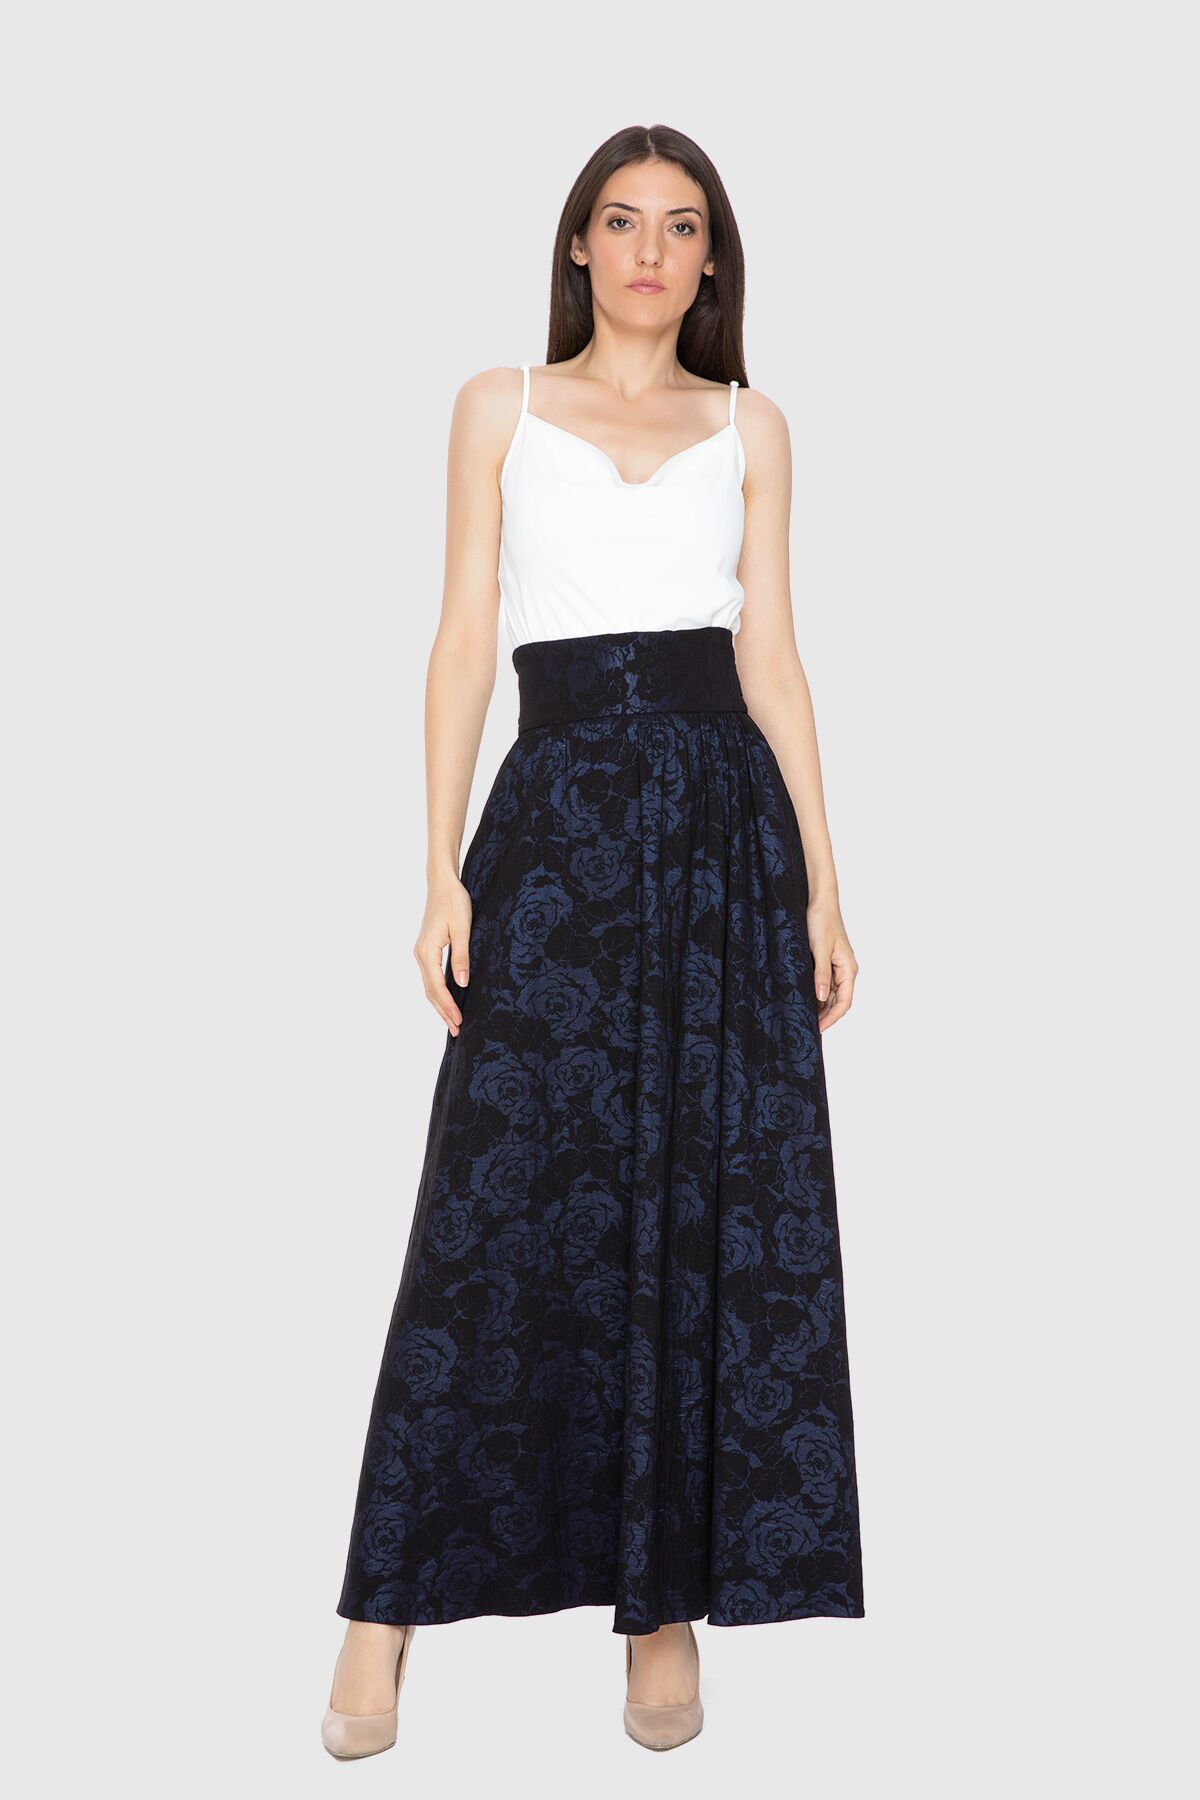  GIZIA - Patterned Flared Long Navy Blue Skirt